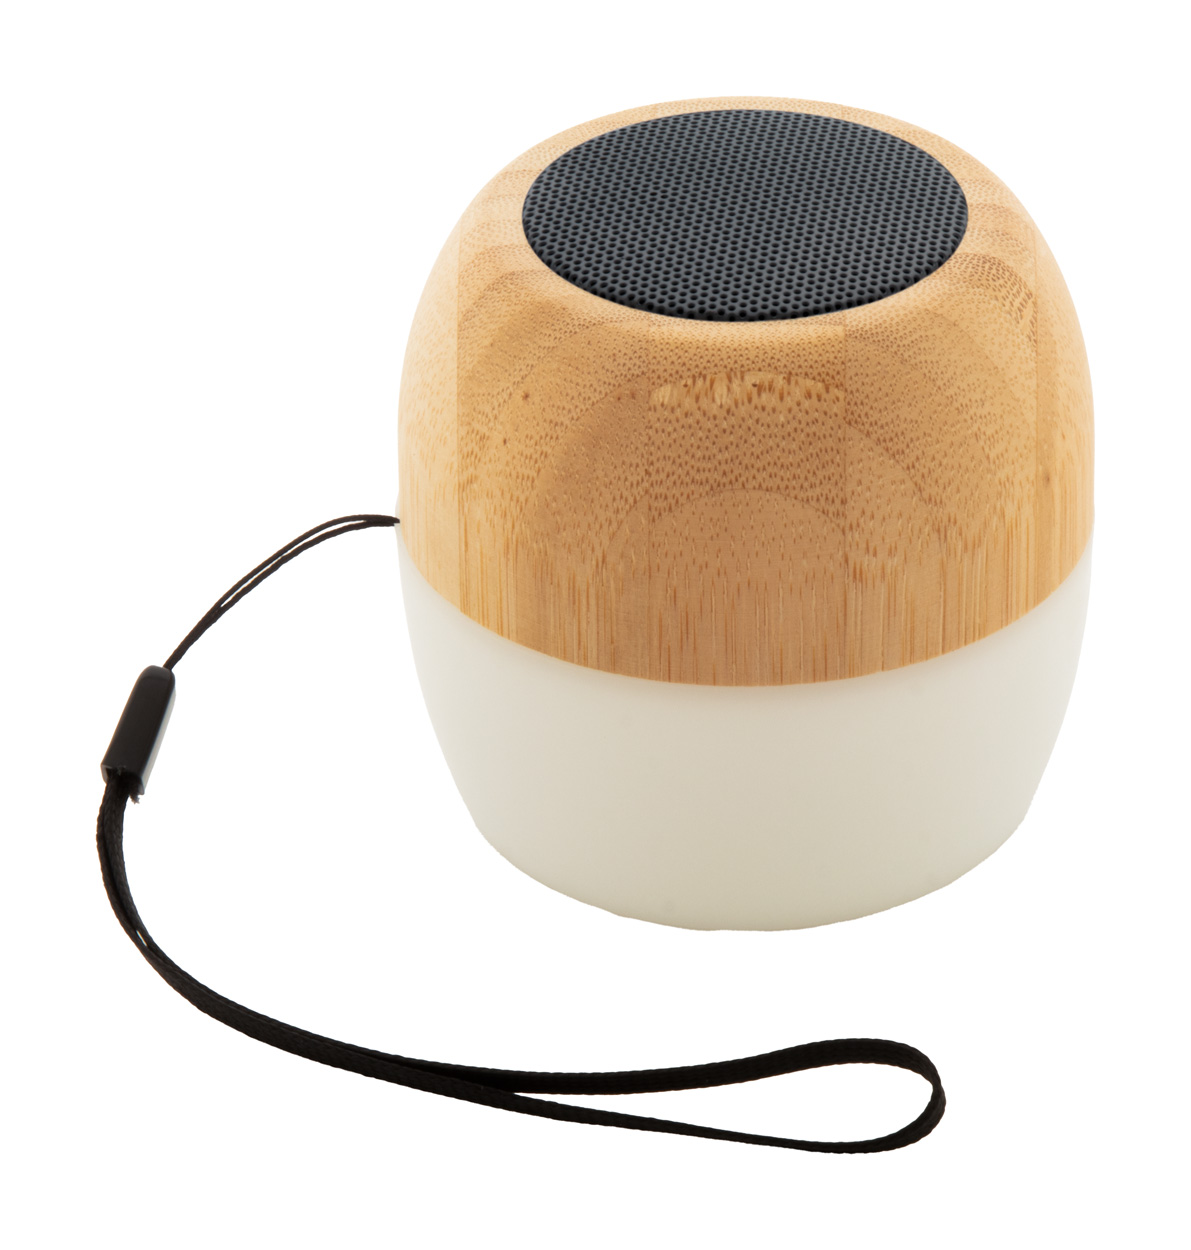 Lightbeat bluetooth speaker - beige